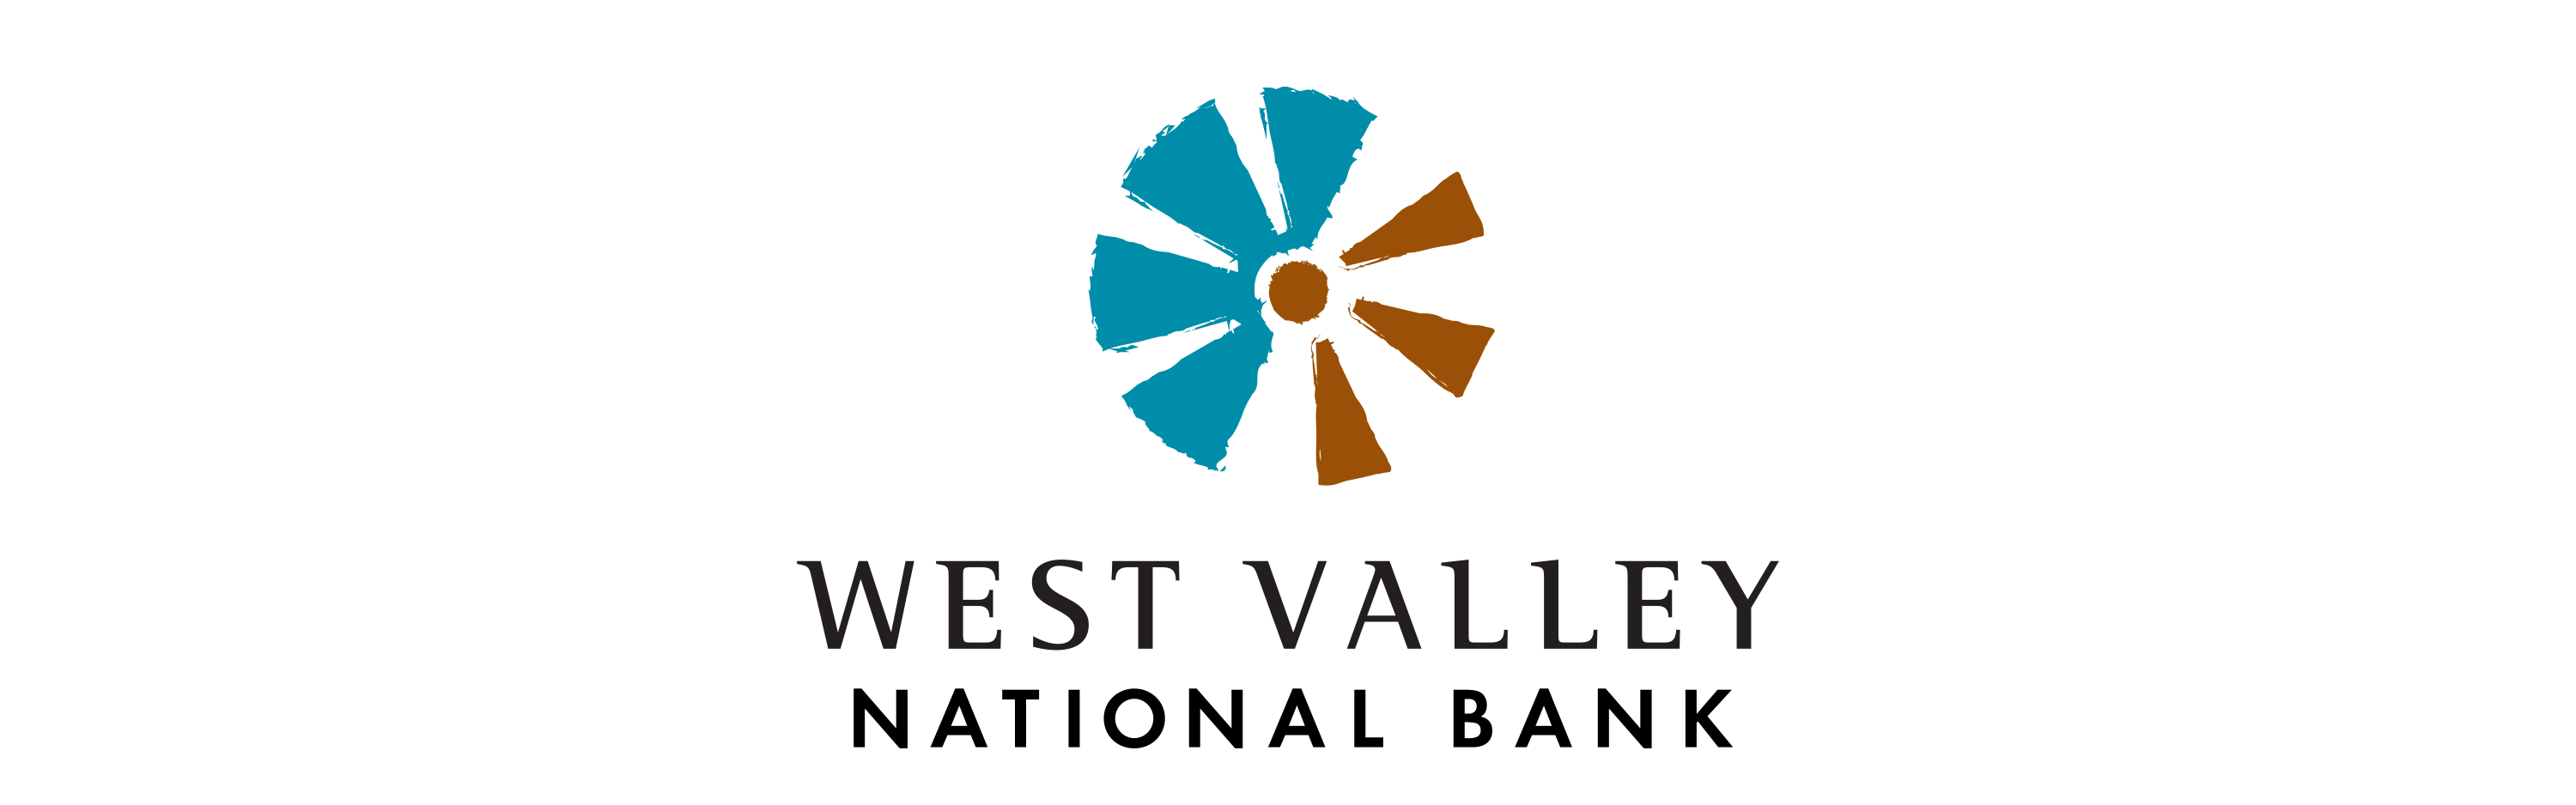 _0000_West_Valley_National_Bank_Logo_Vector